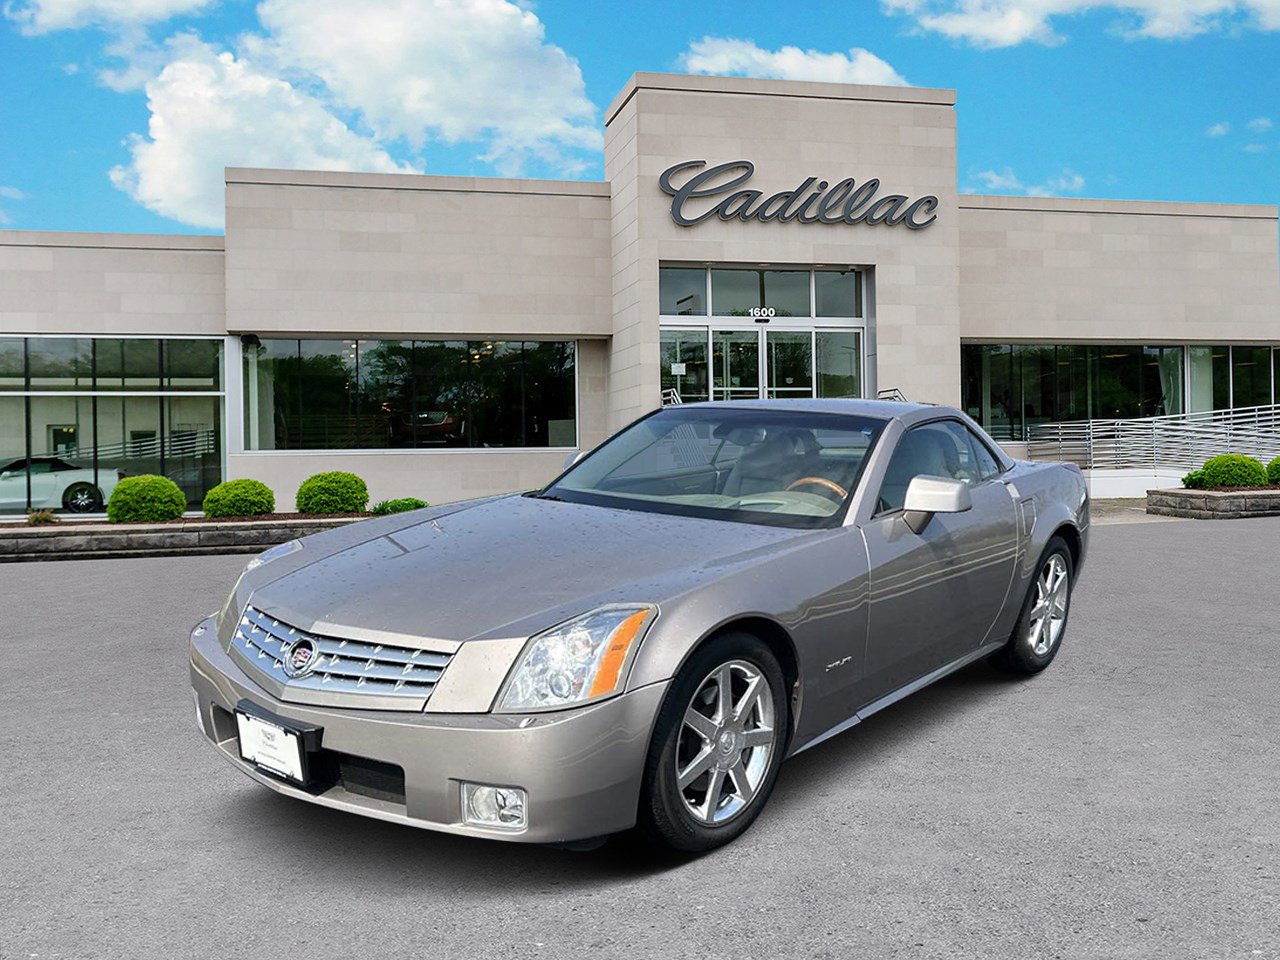 Pre-Owned 2004 Cadillac XLR 2DR CONV Convertible in Peoria #0401401 |  Uftring Weston Cadillac